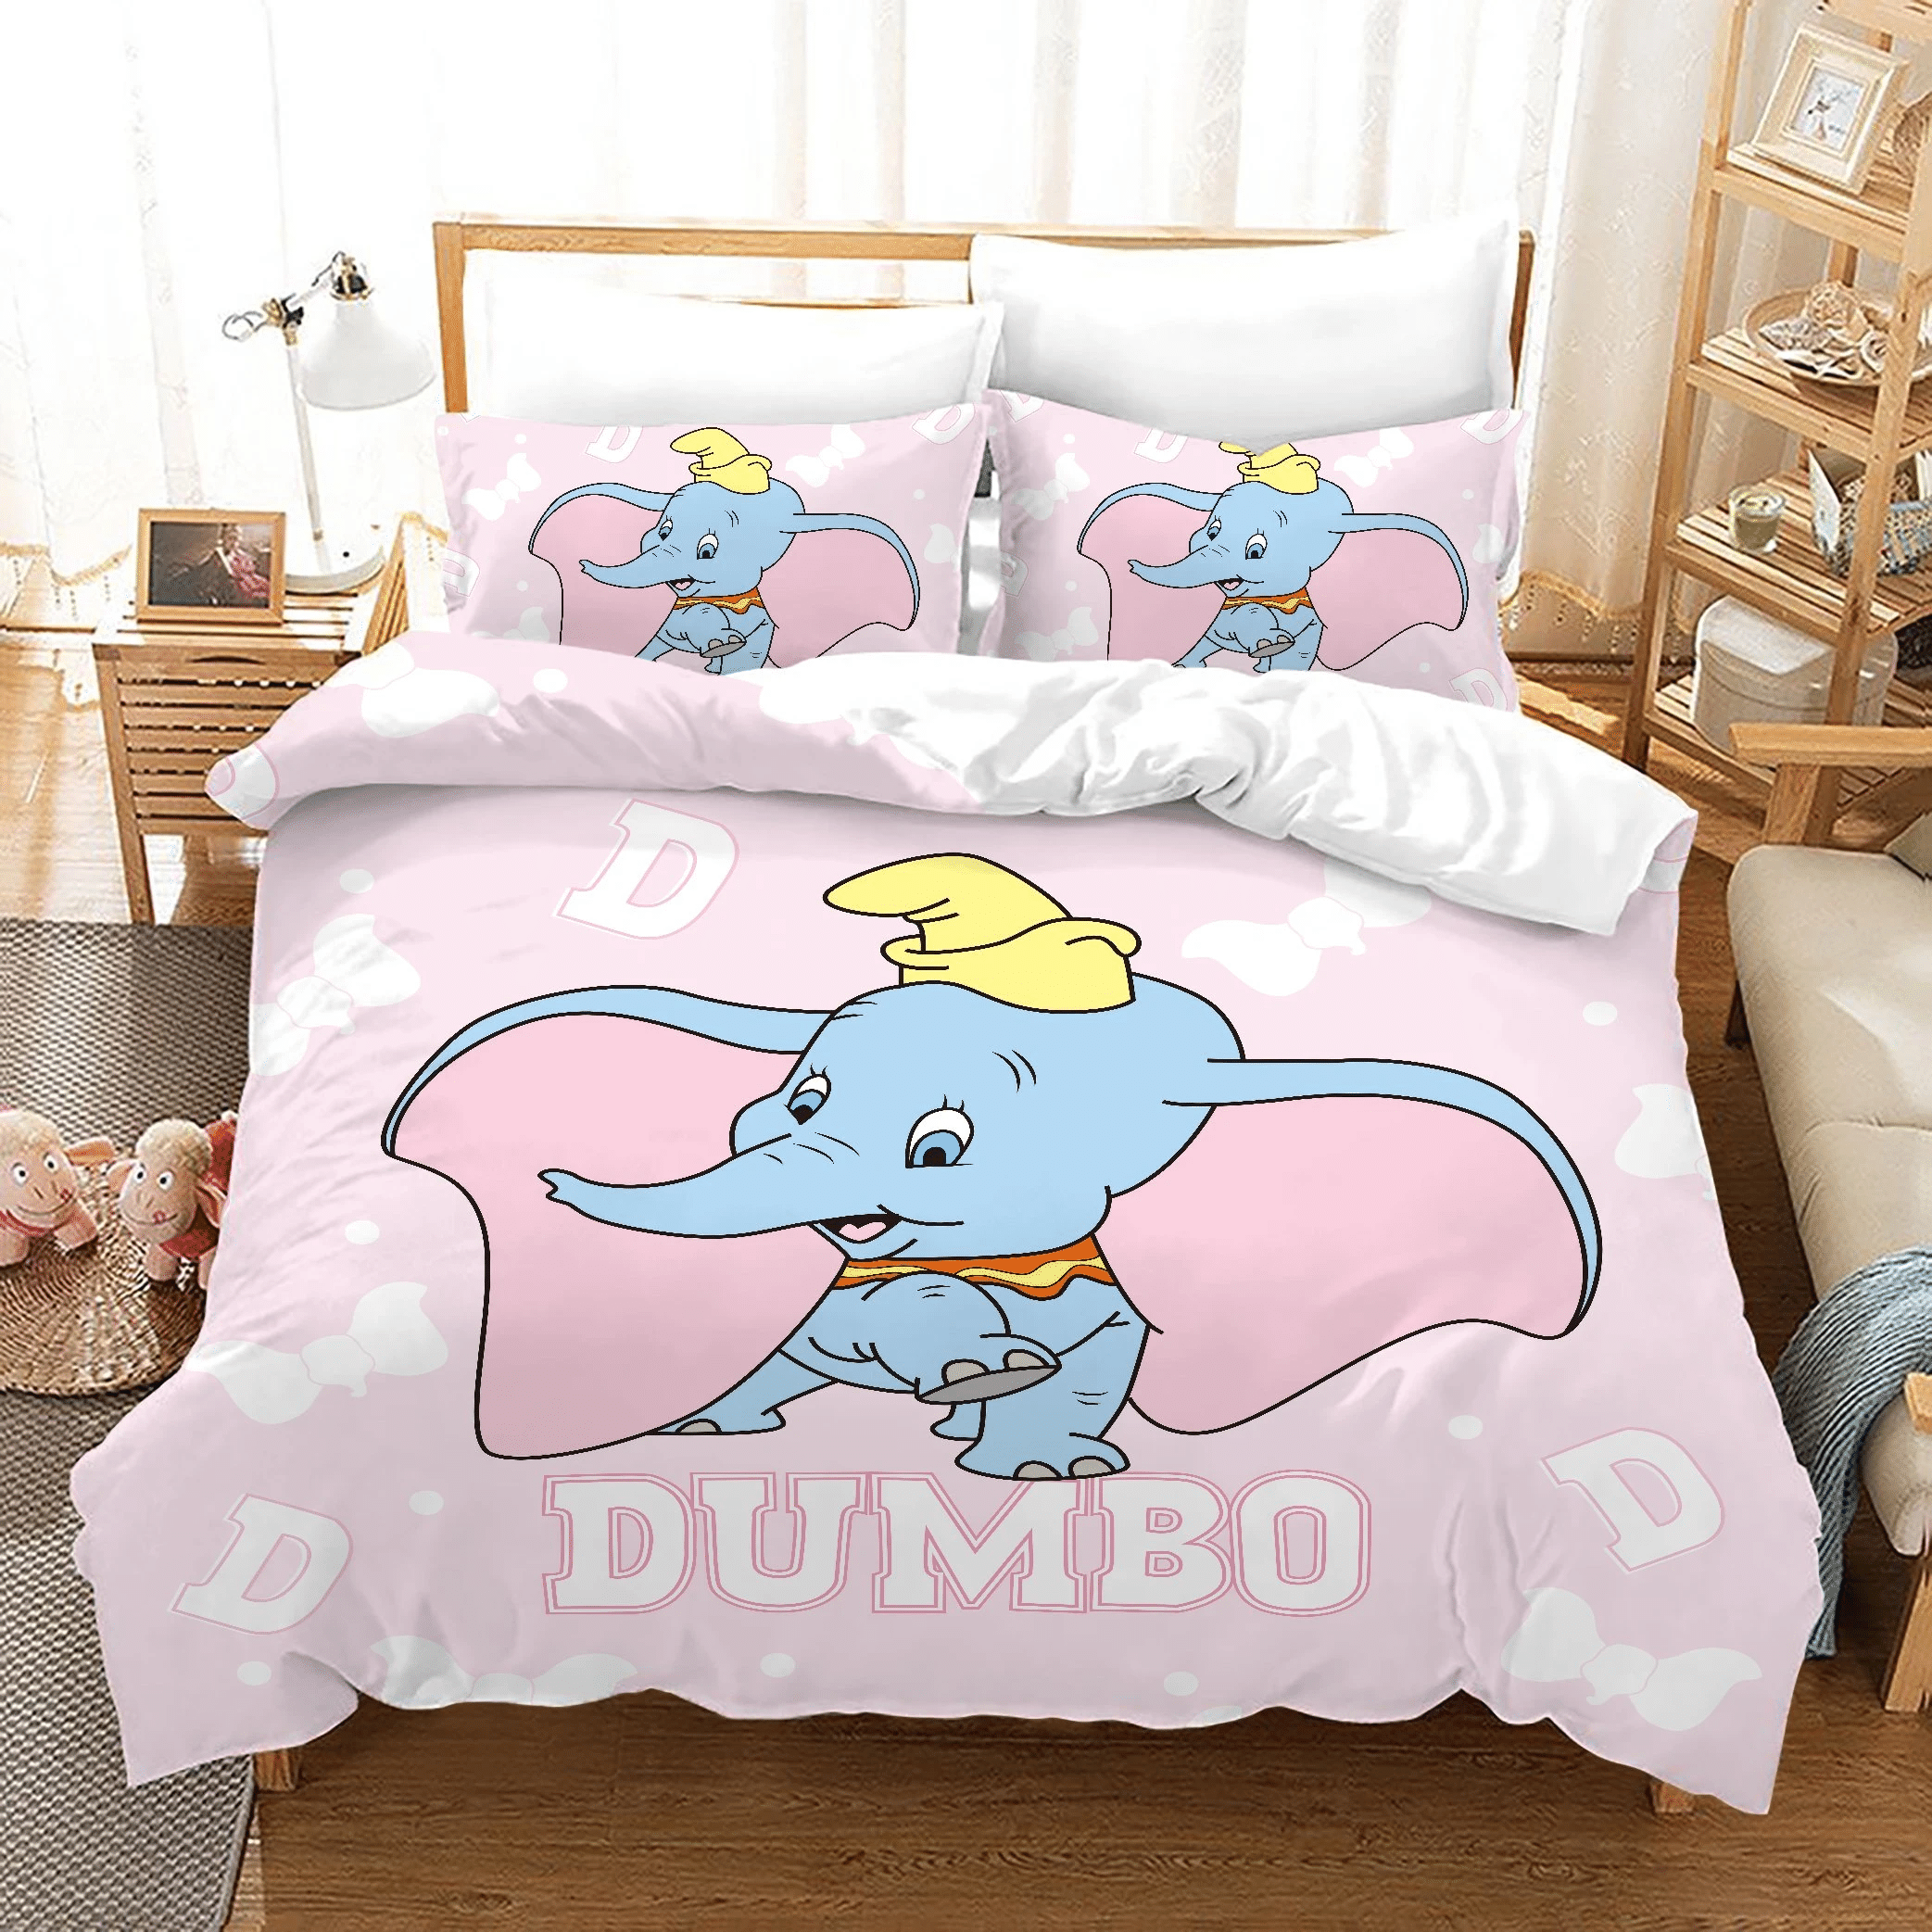 Dumbo 14 Duvet Cover Quilt Cover Pillowcase Bedding Sets Bed